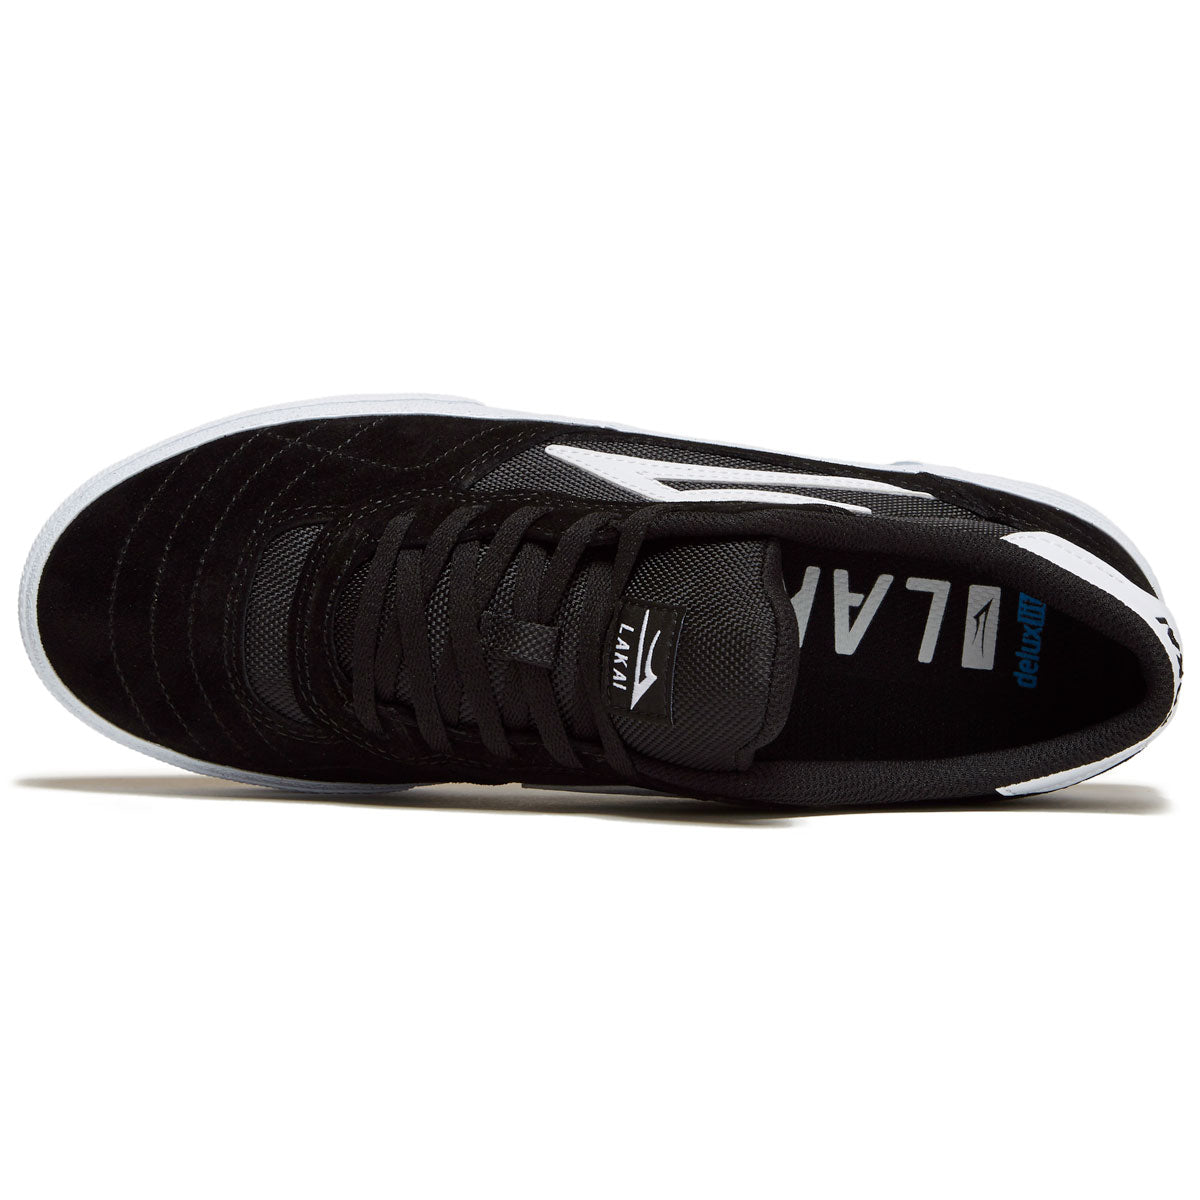 Lakai Cambridge Shoes - Black/White Suede image 3